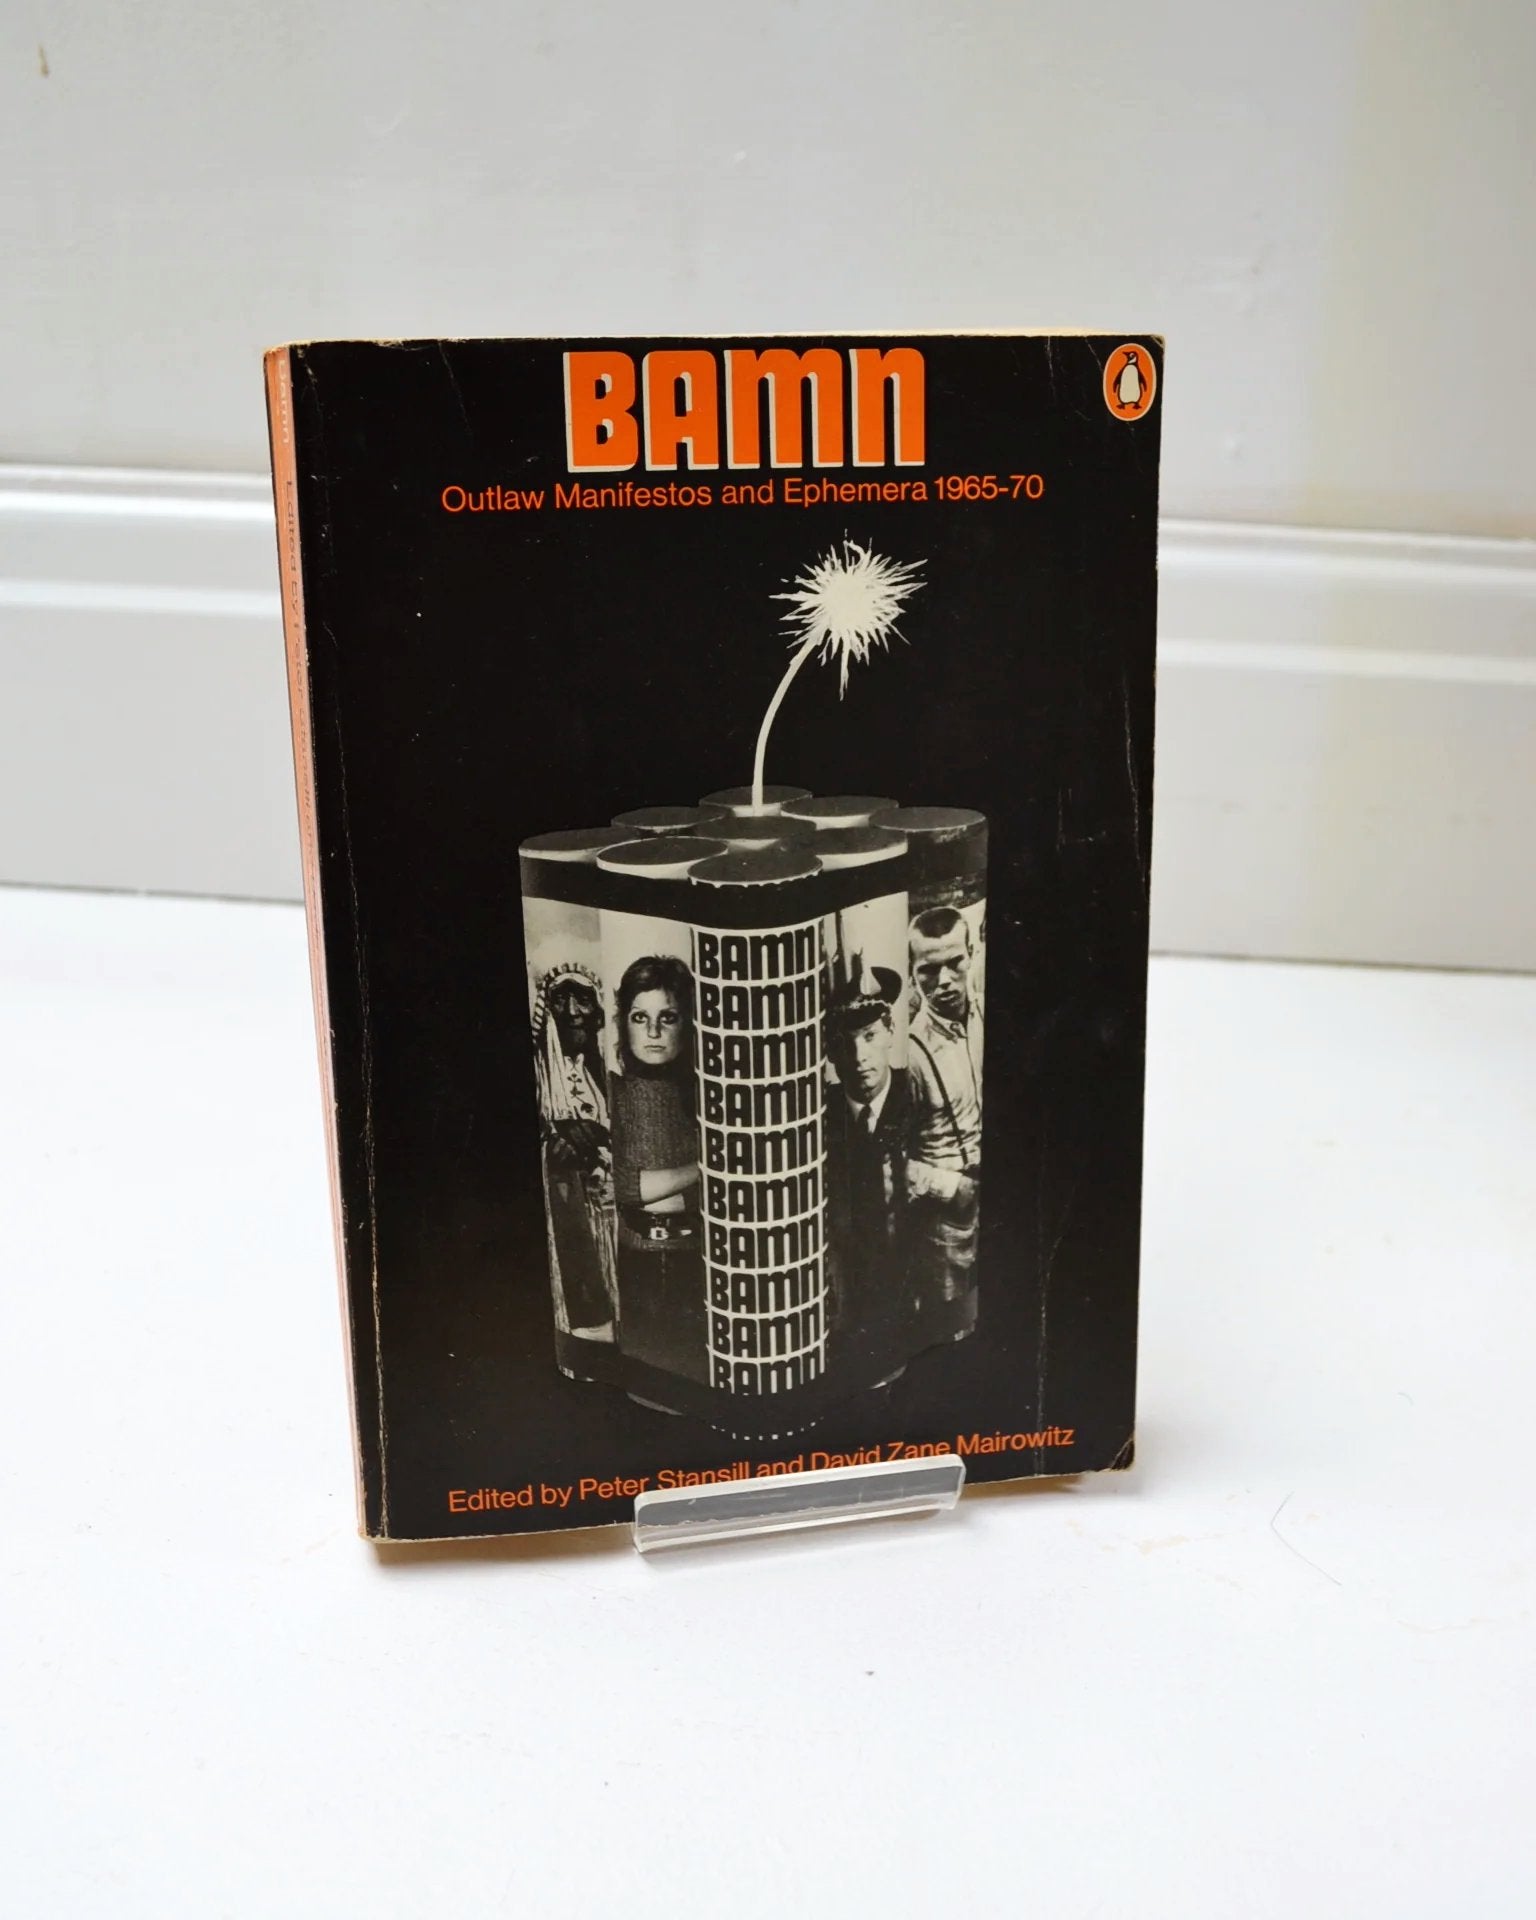 BAMN: Outlaw Manifestos and Ephemera 1965 – 70 Ed. by Peter Stansill and David Zane Mairowitz (Penguin / 1971)